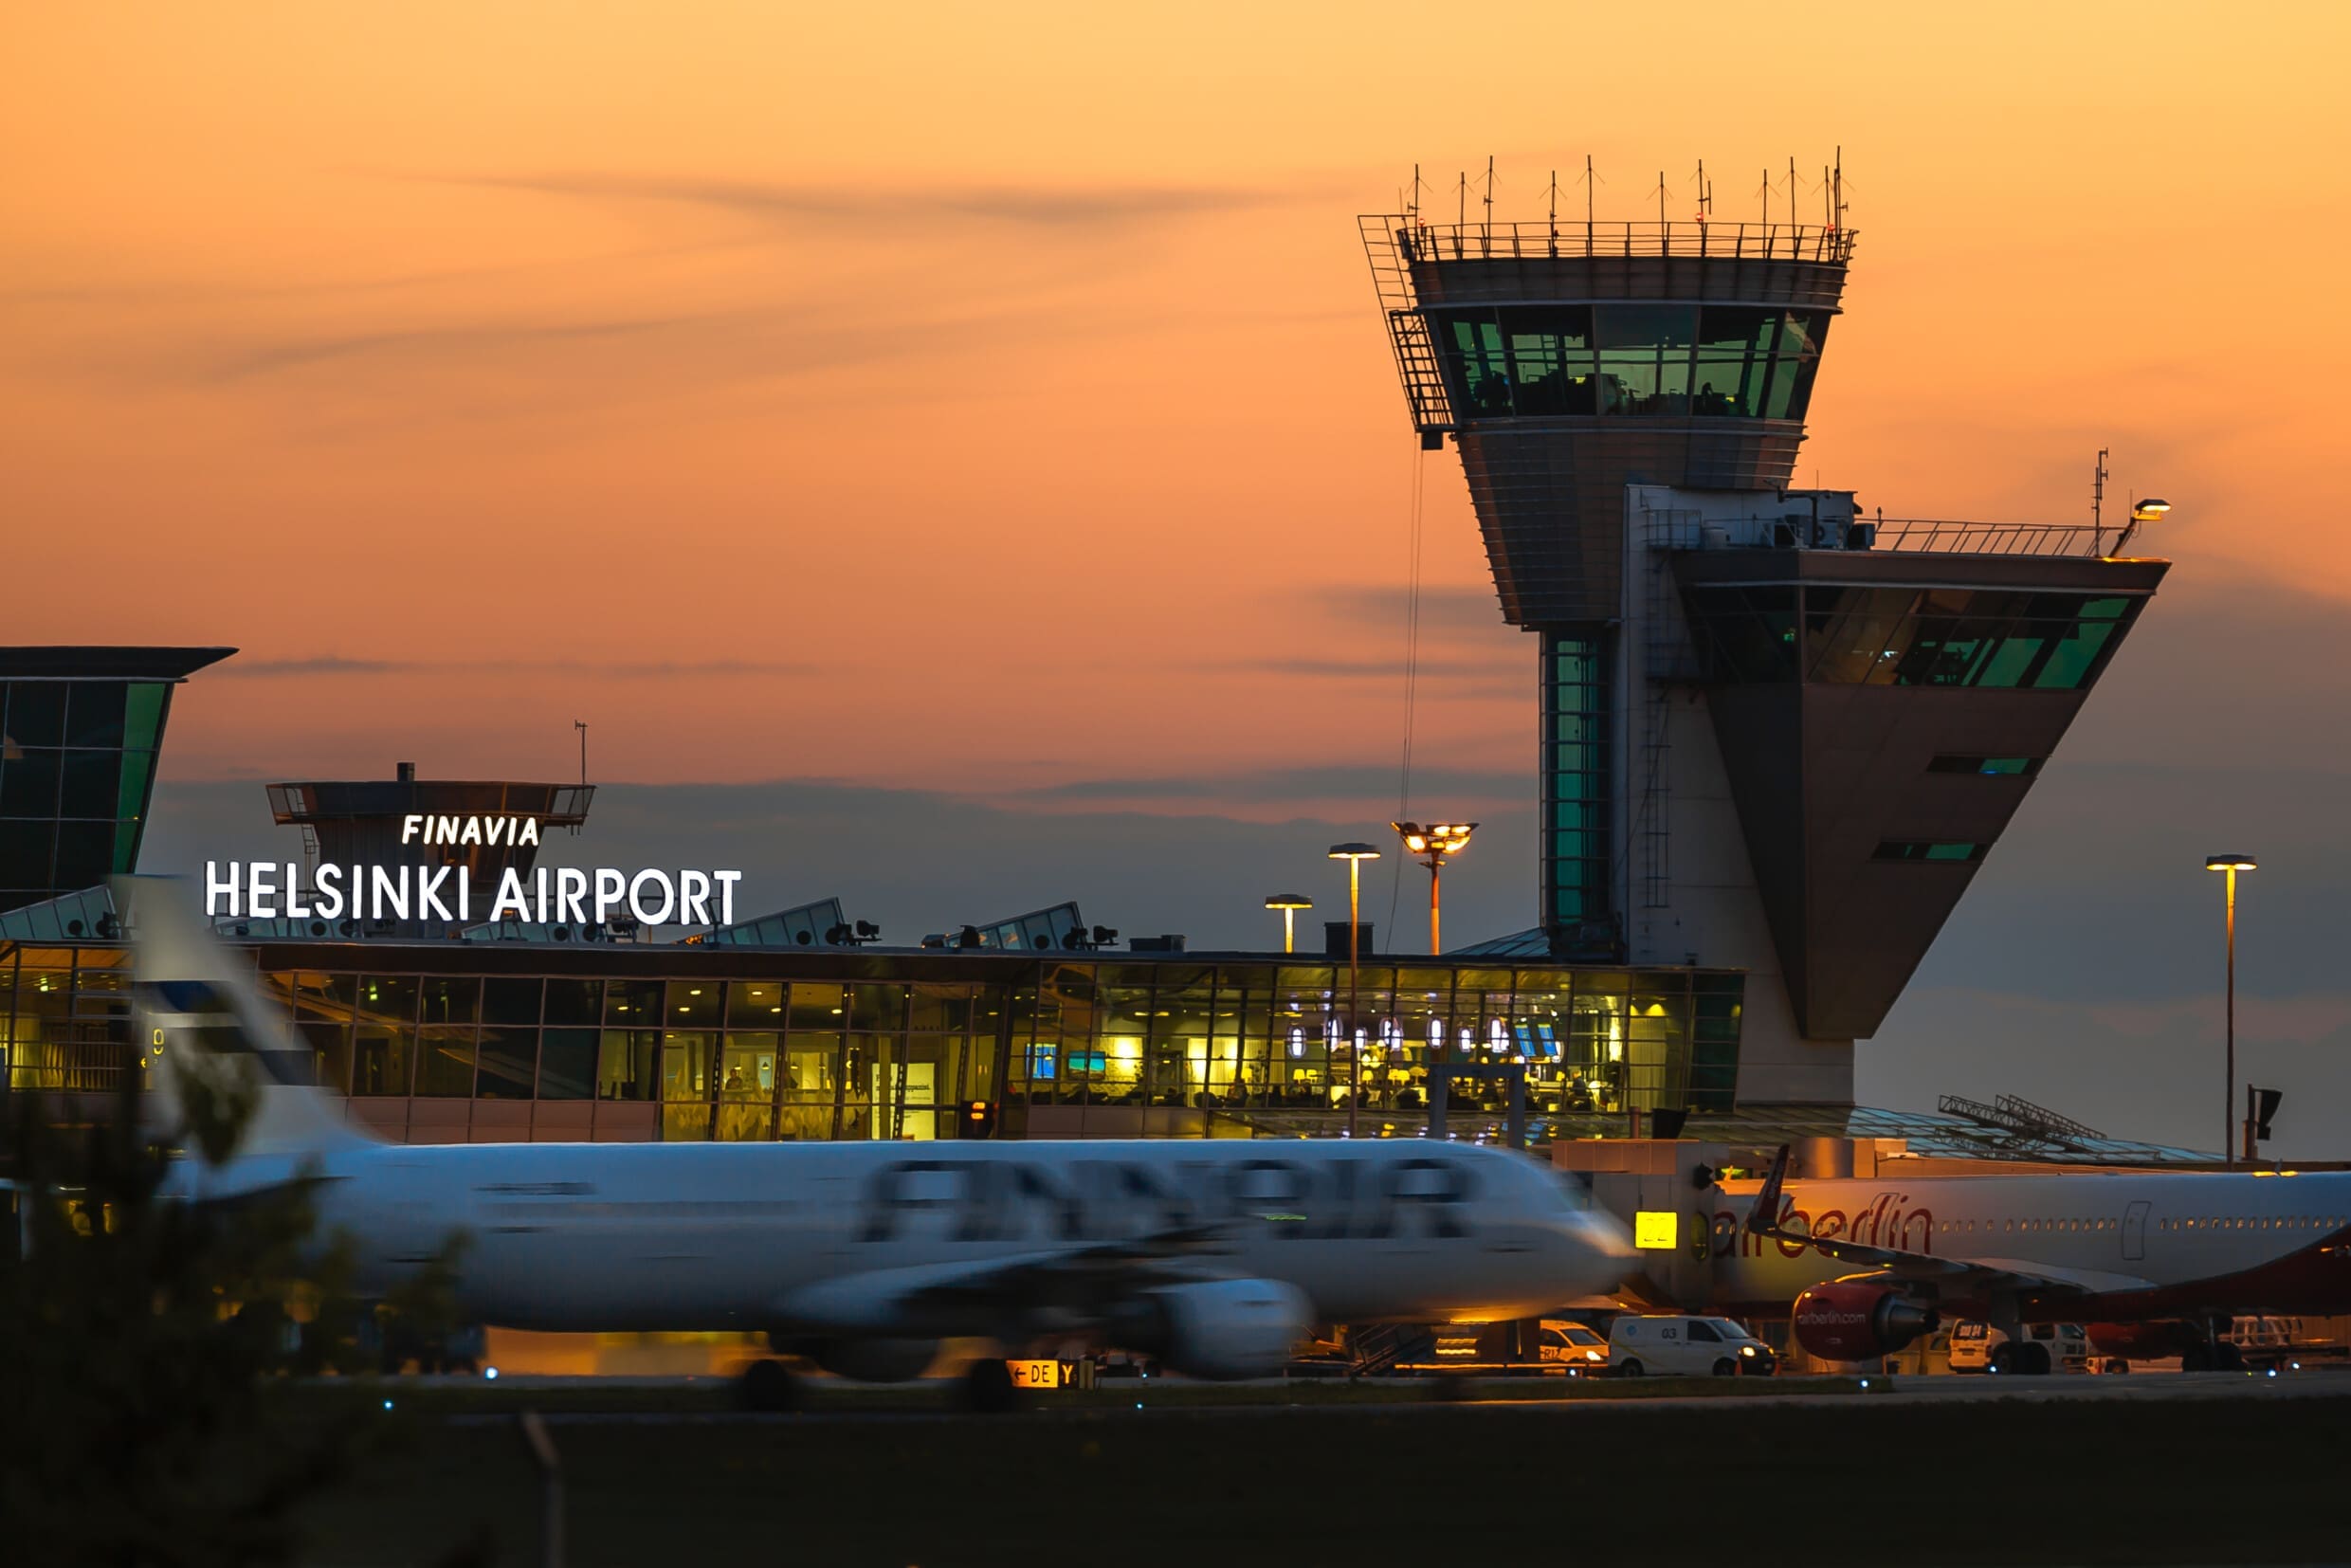 Helsinki airport at sunset behind a Finnair plane